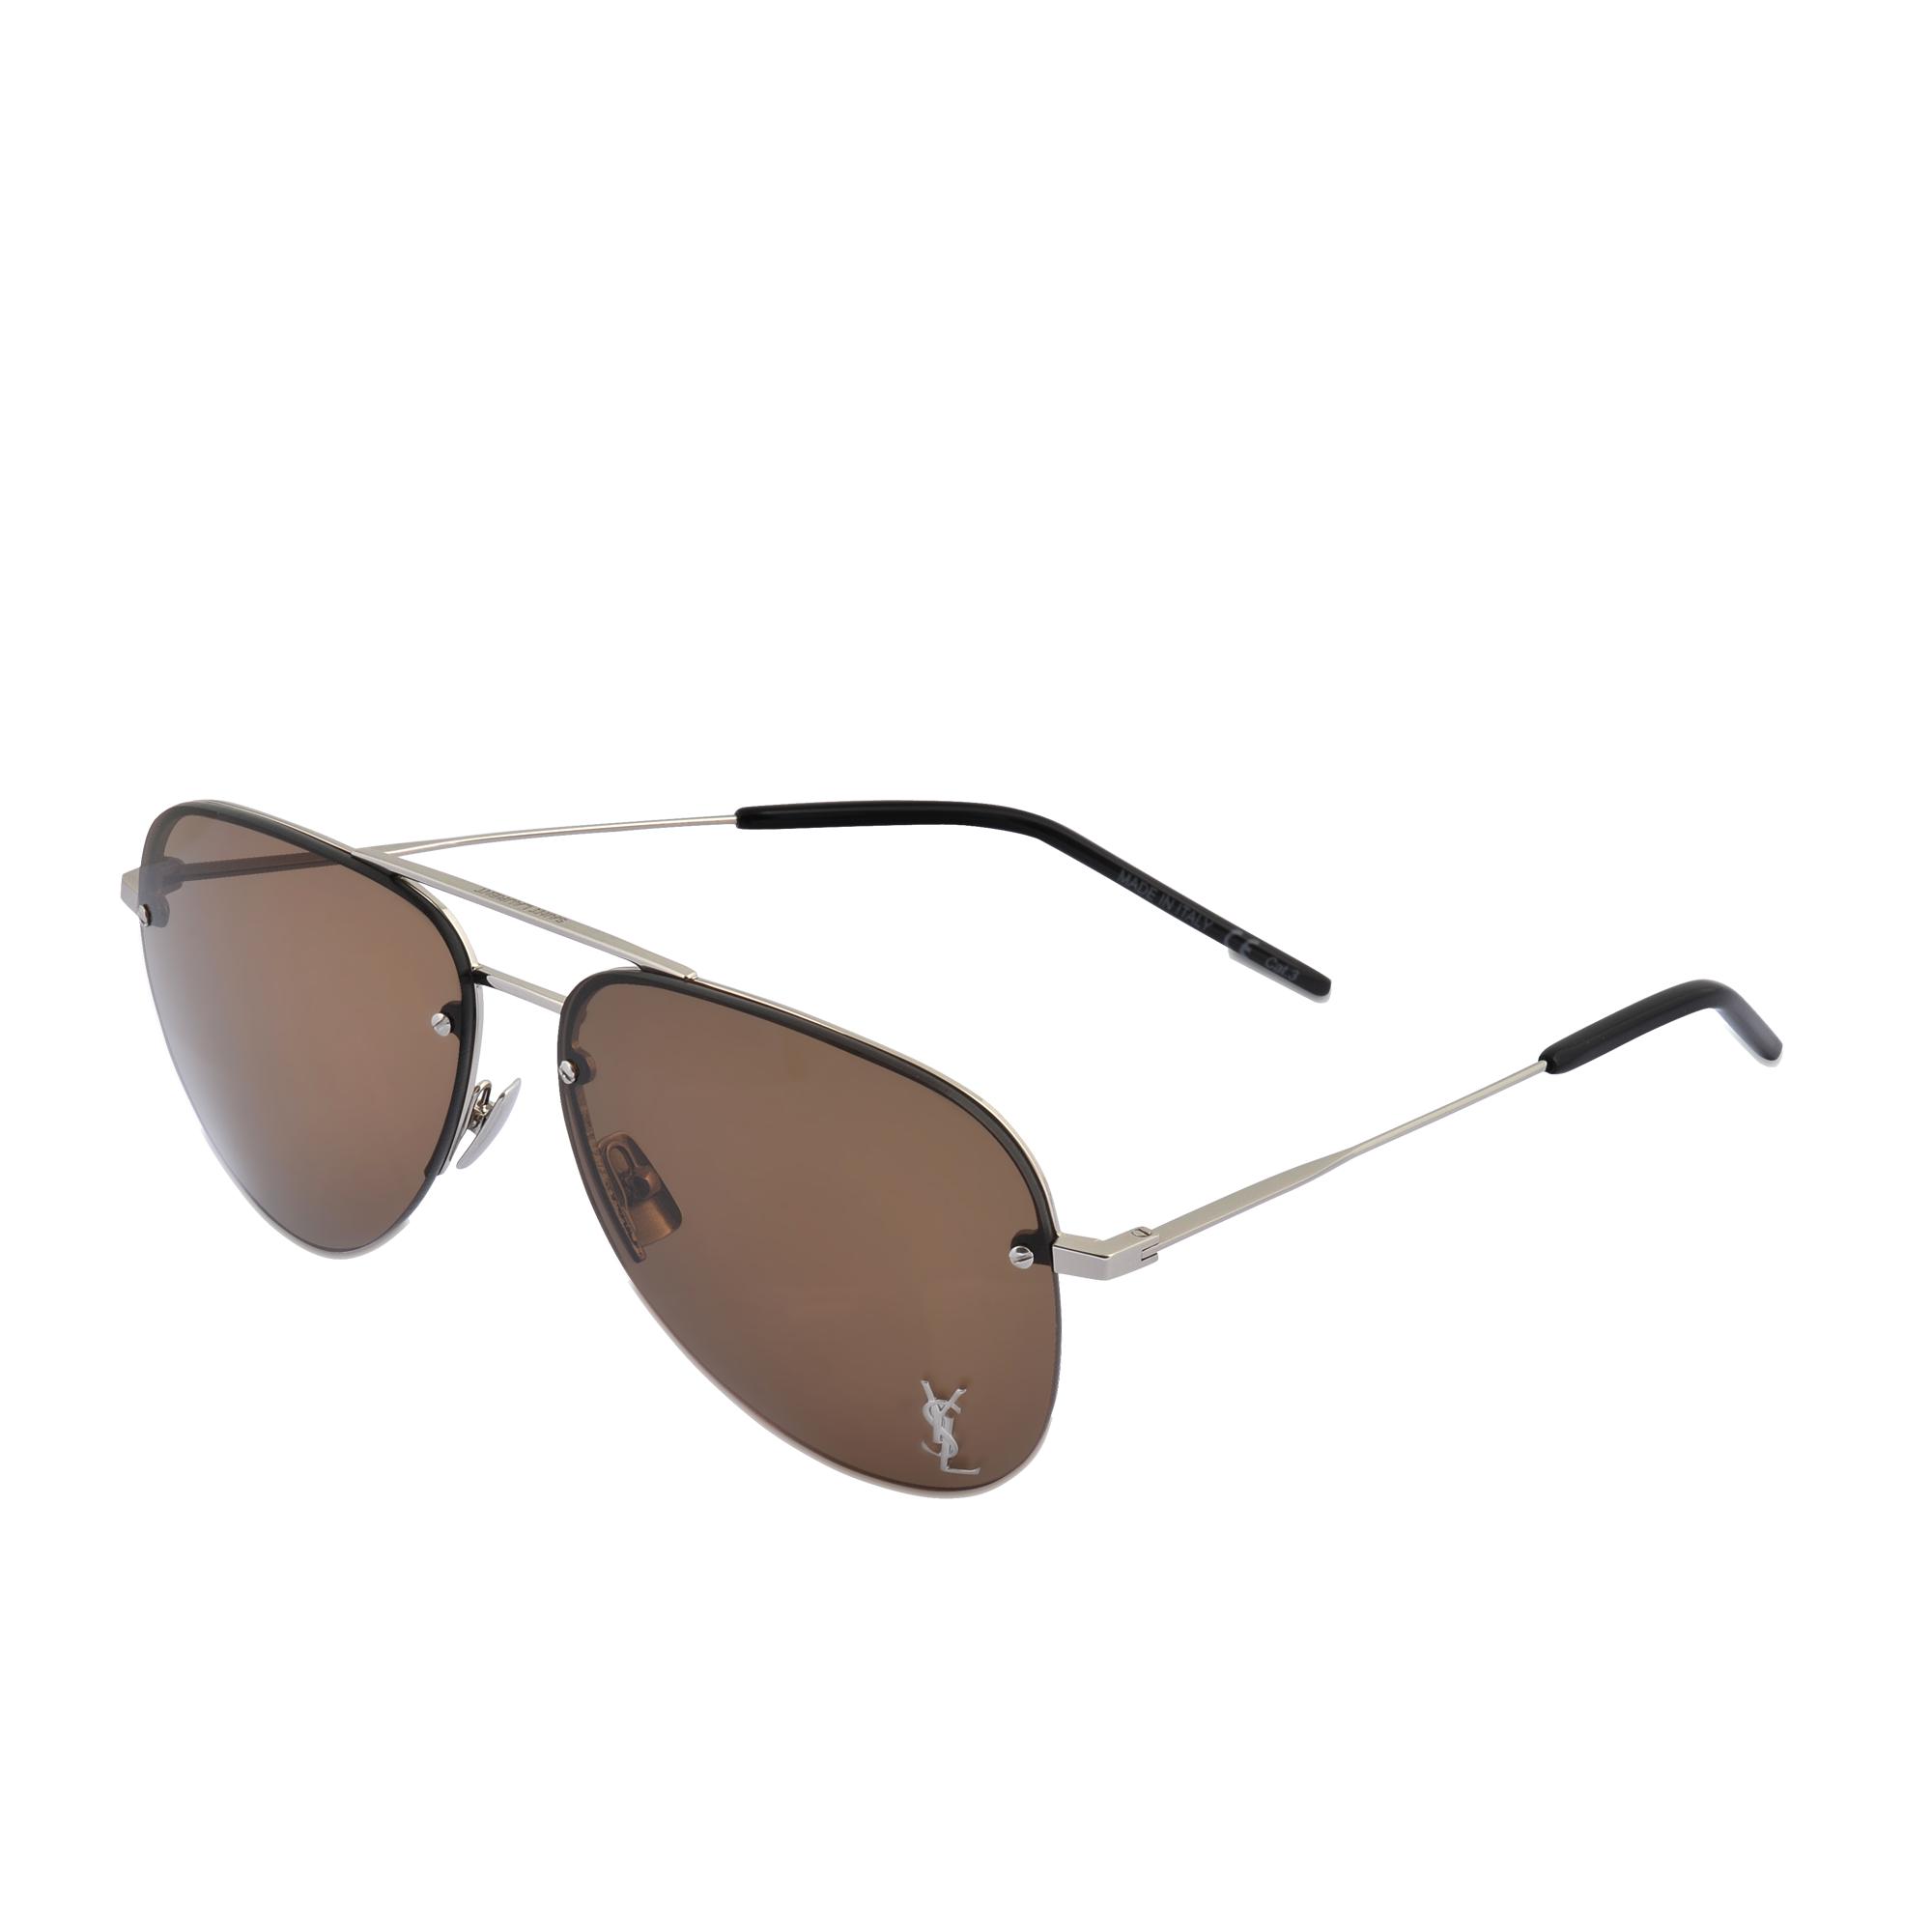 Saint Laurent Sunglasses Classic 11 M-002 | Lyst